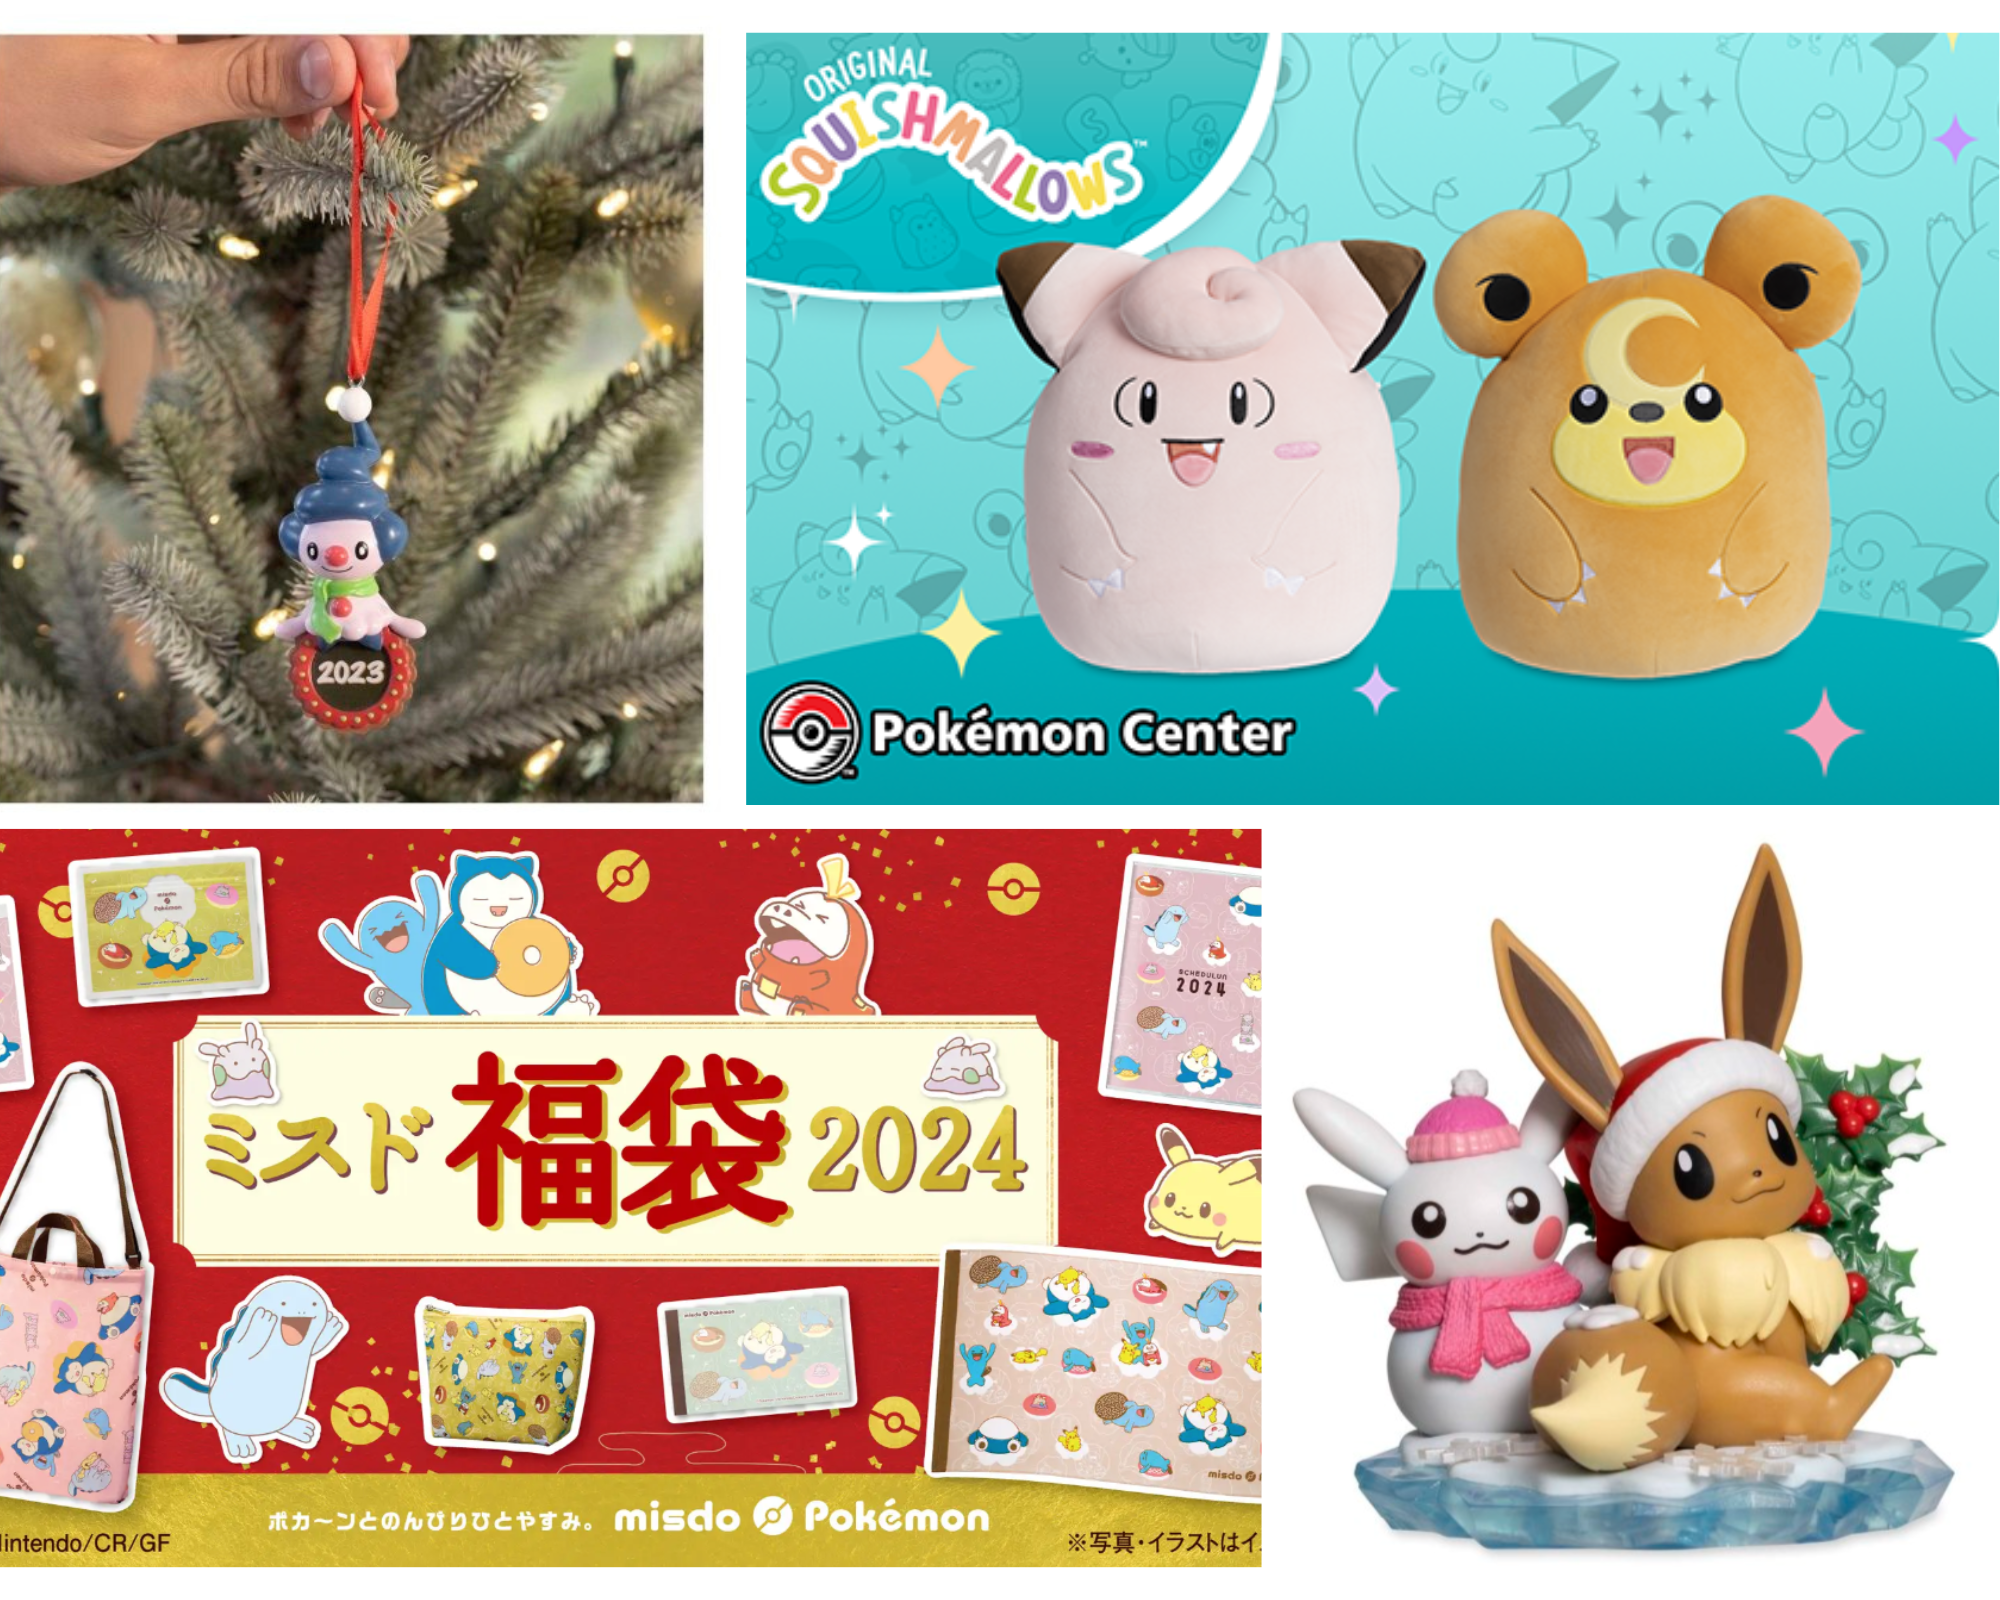 Mime Jr. Ornament, Pokémon Squishmallows, Mister Donut Pokémon promo, and Eevee winter figure